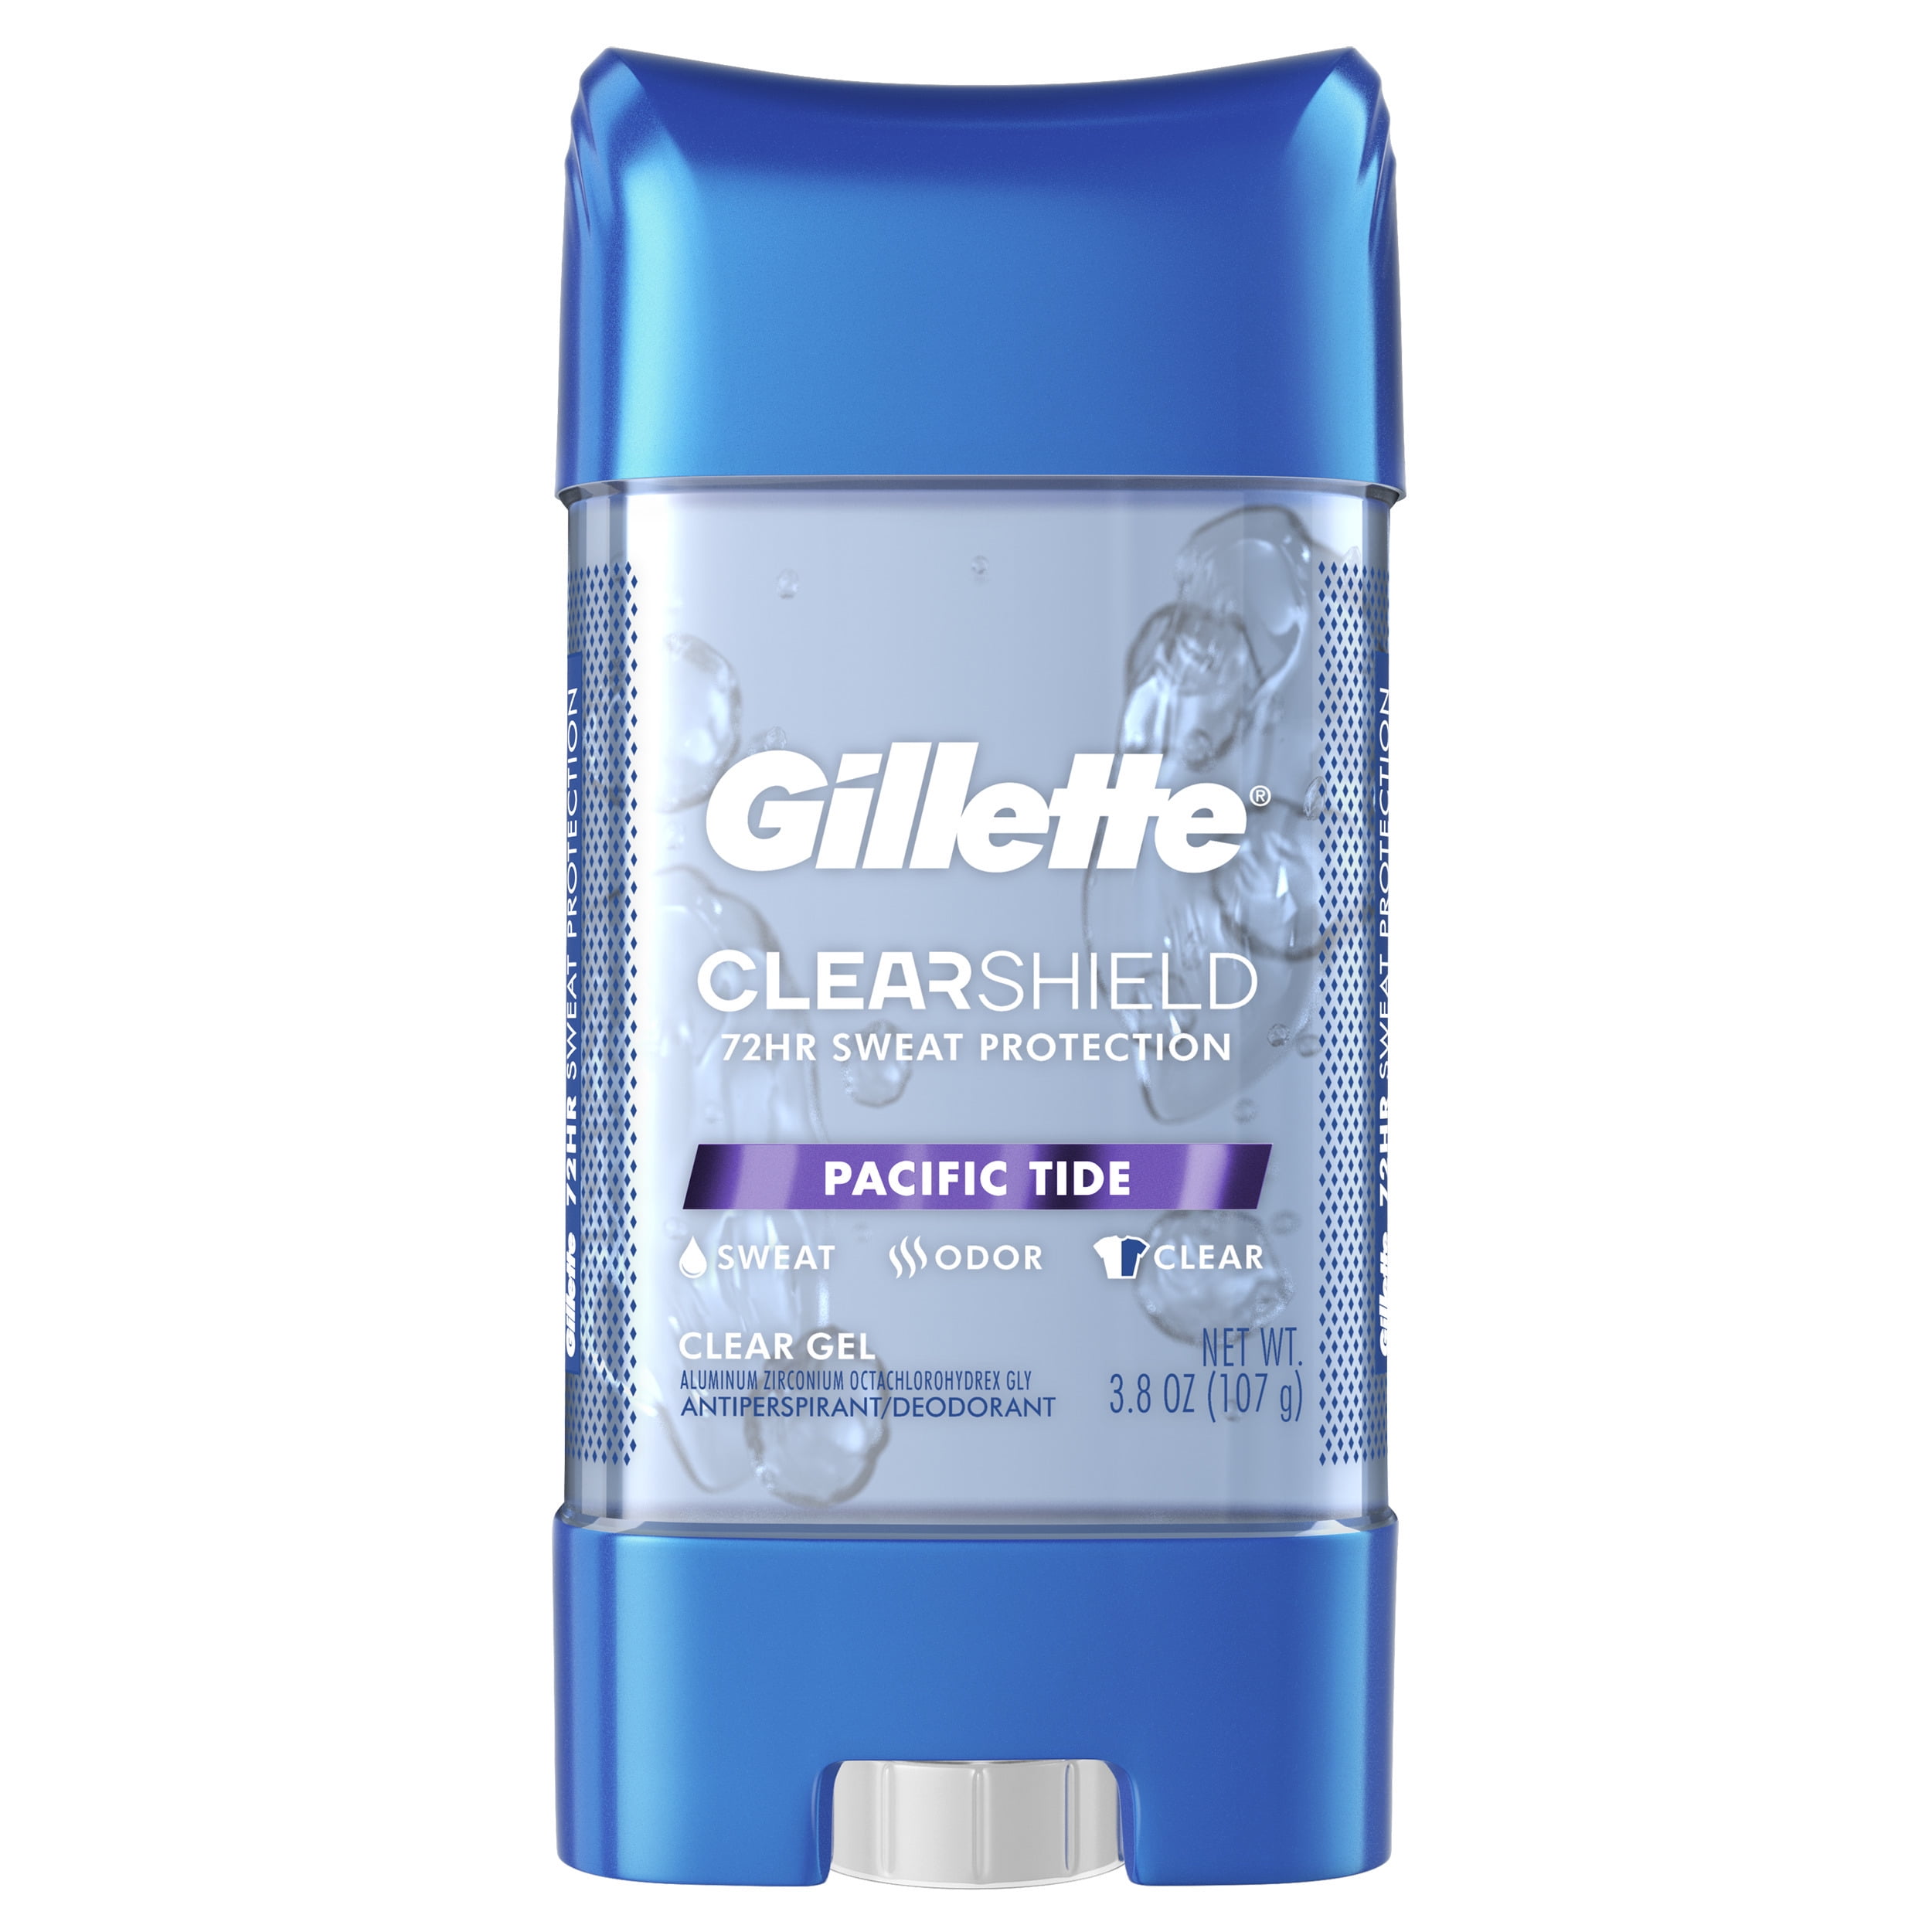 Gillette Antiperspirant Deodorant for Men, Clear Gel, Pacific Tide, 3.8 oz